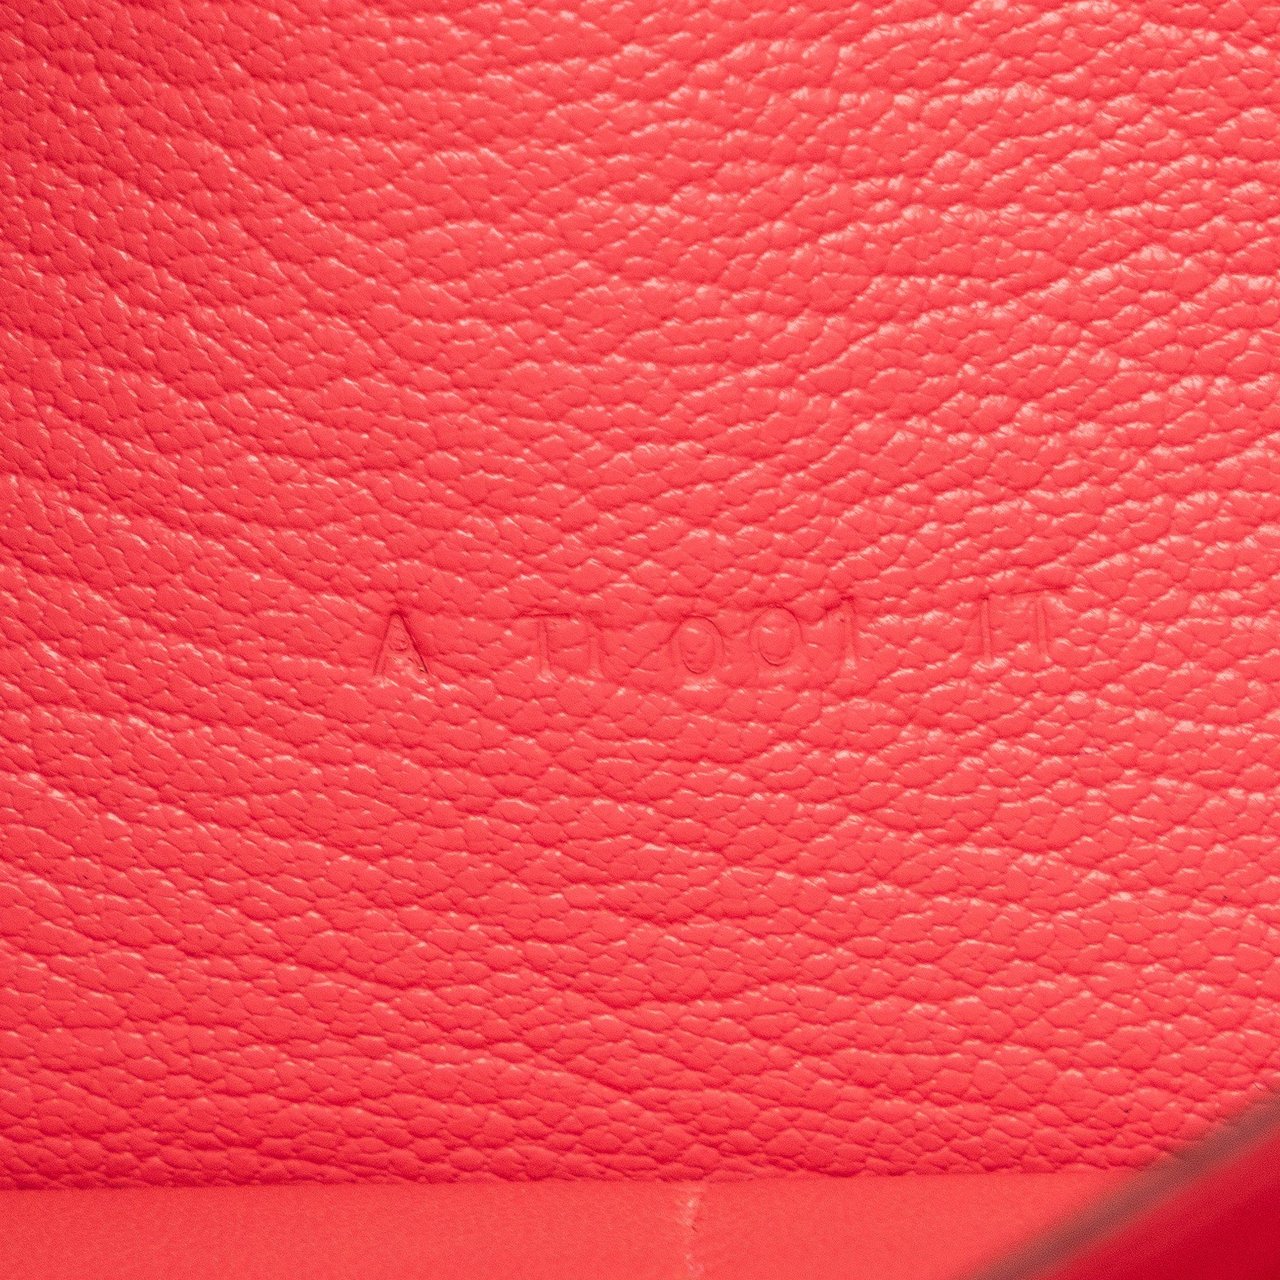 Hermès Chevre Classic Kelly Wallet Roze